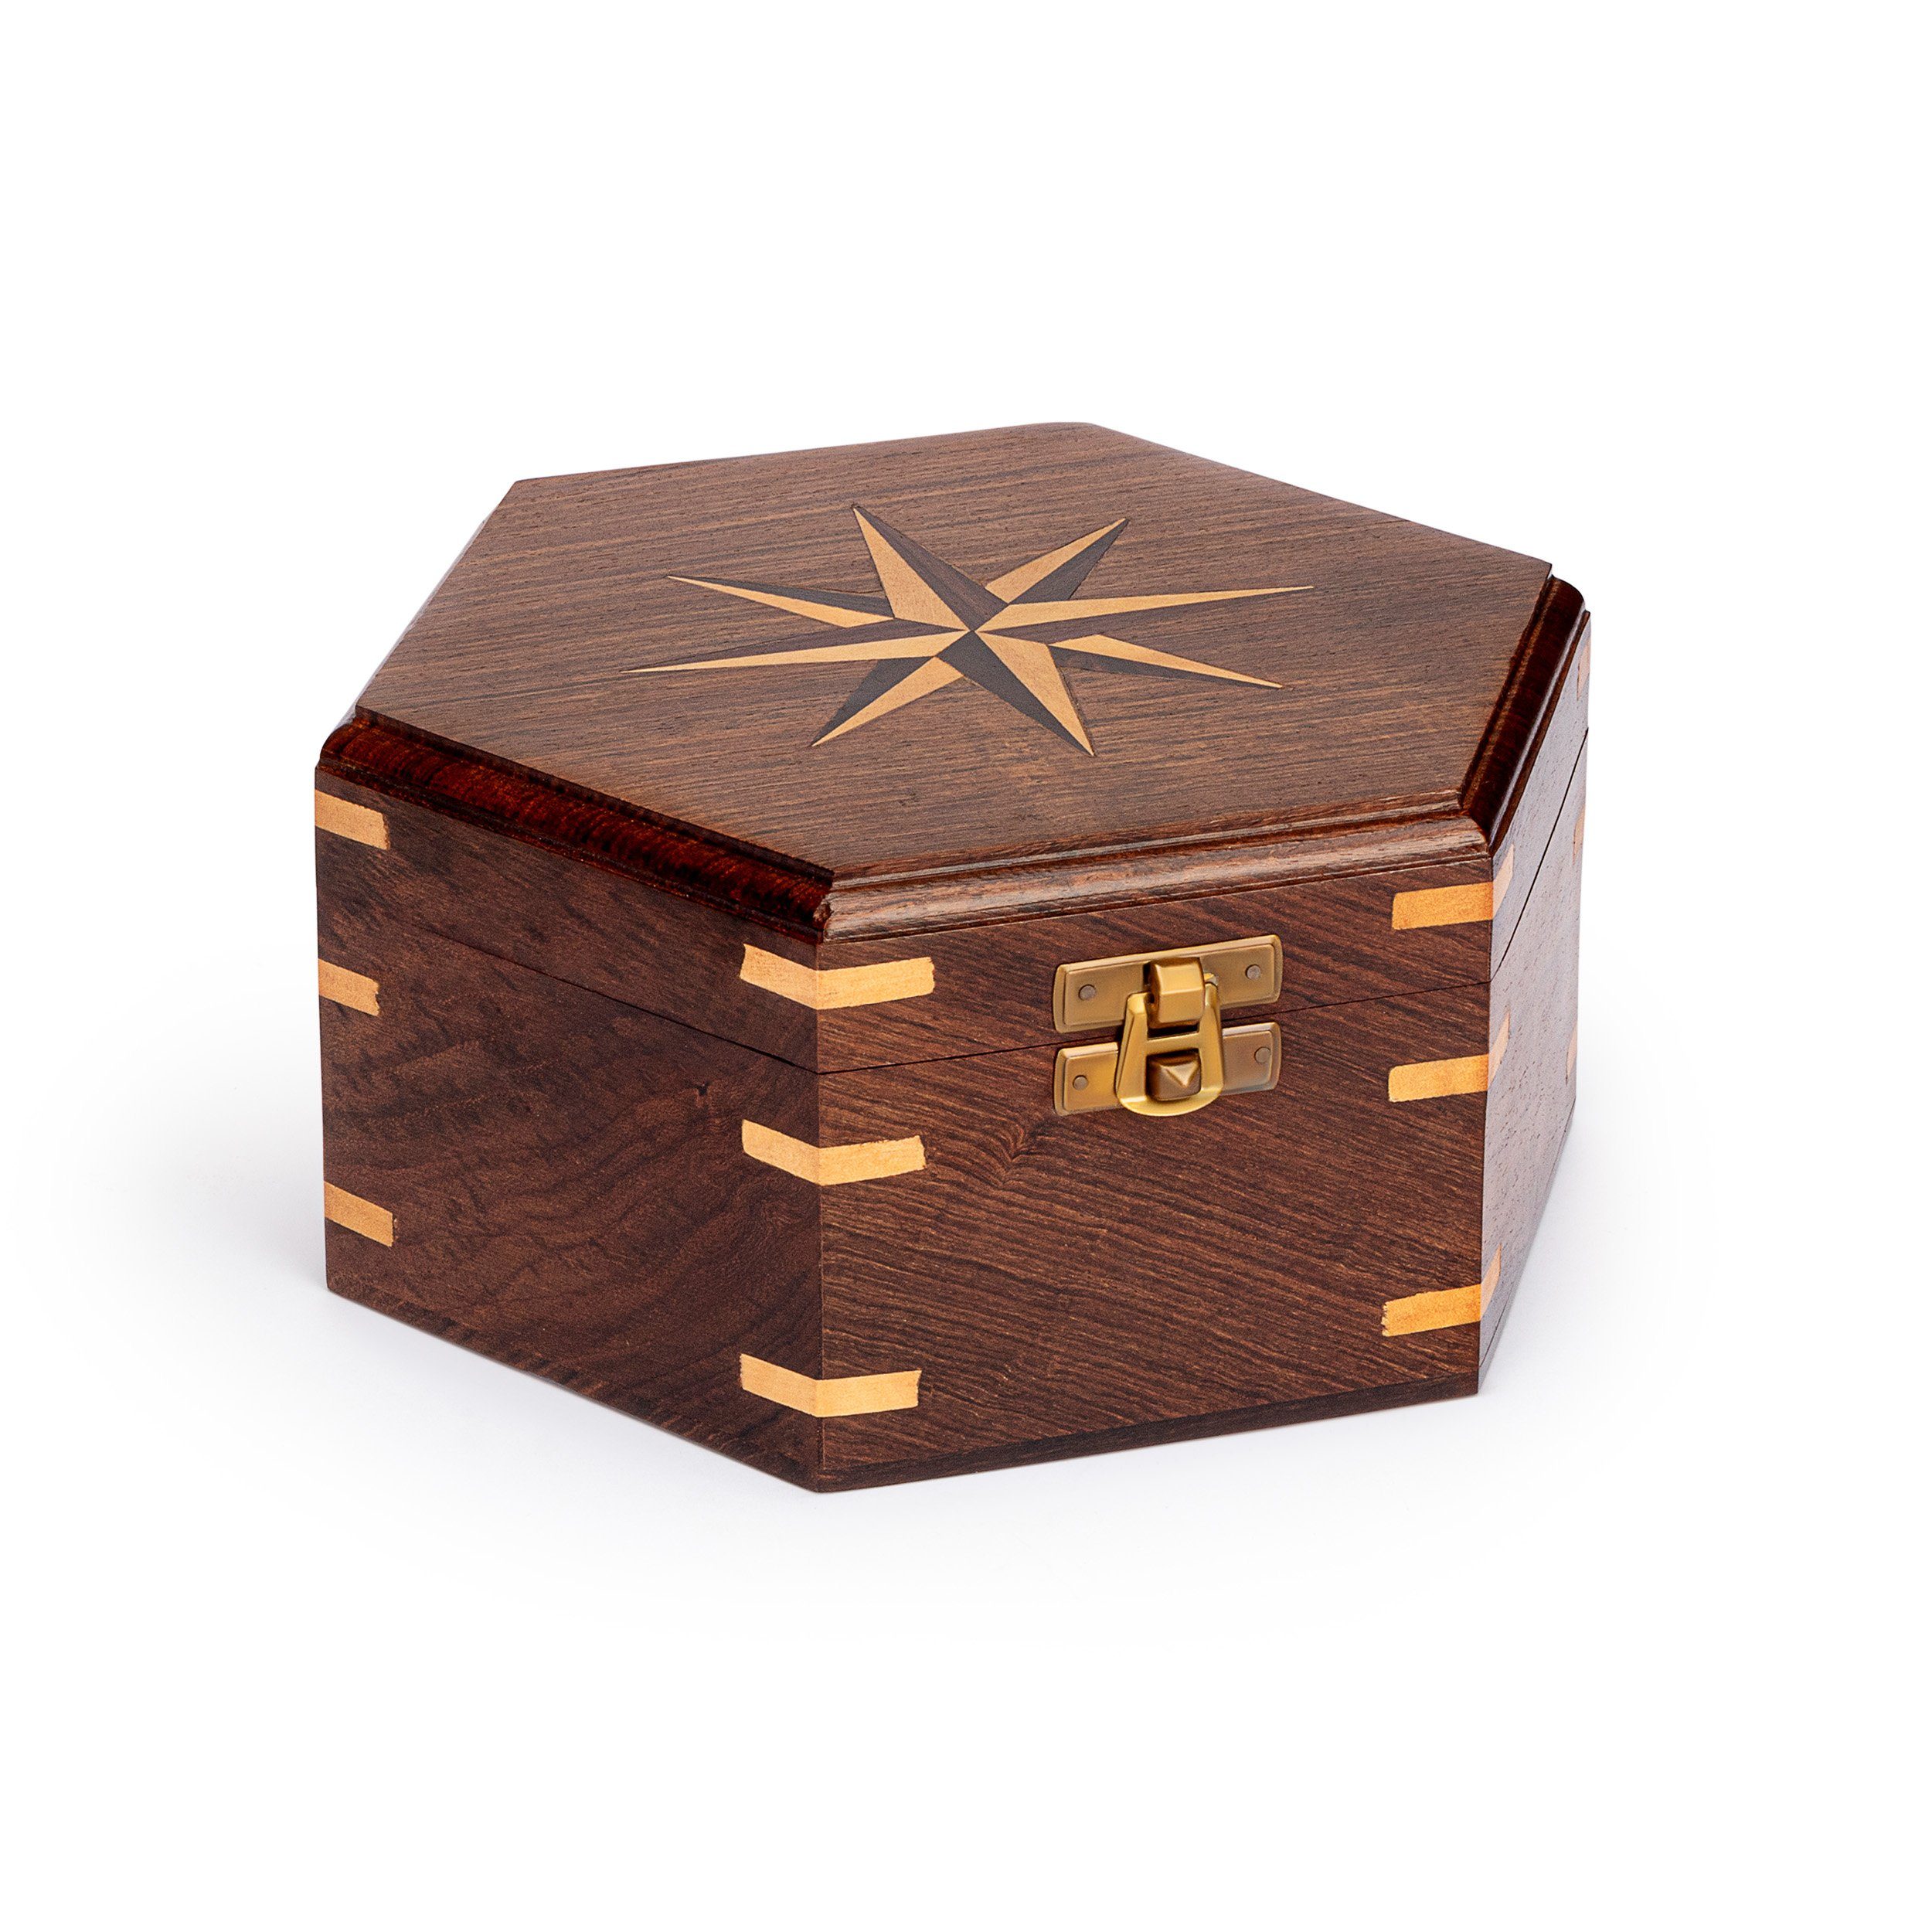 NKlaus Aufbewahrungsbox Maritim Holzbox sechseckig mit Windrose Inlay aus  Holz und Messing ver (Lieferumfang: 1 Stück), Holz